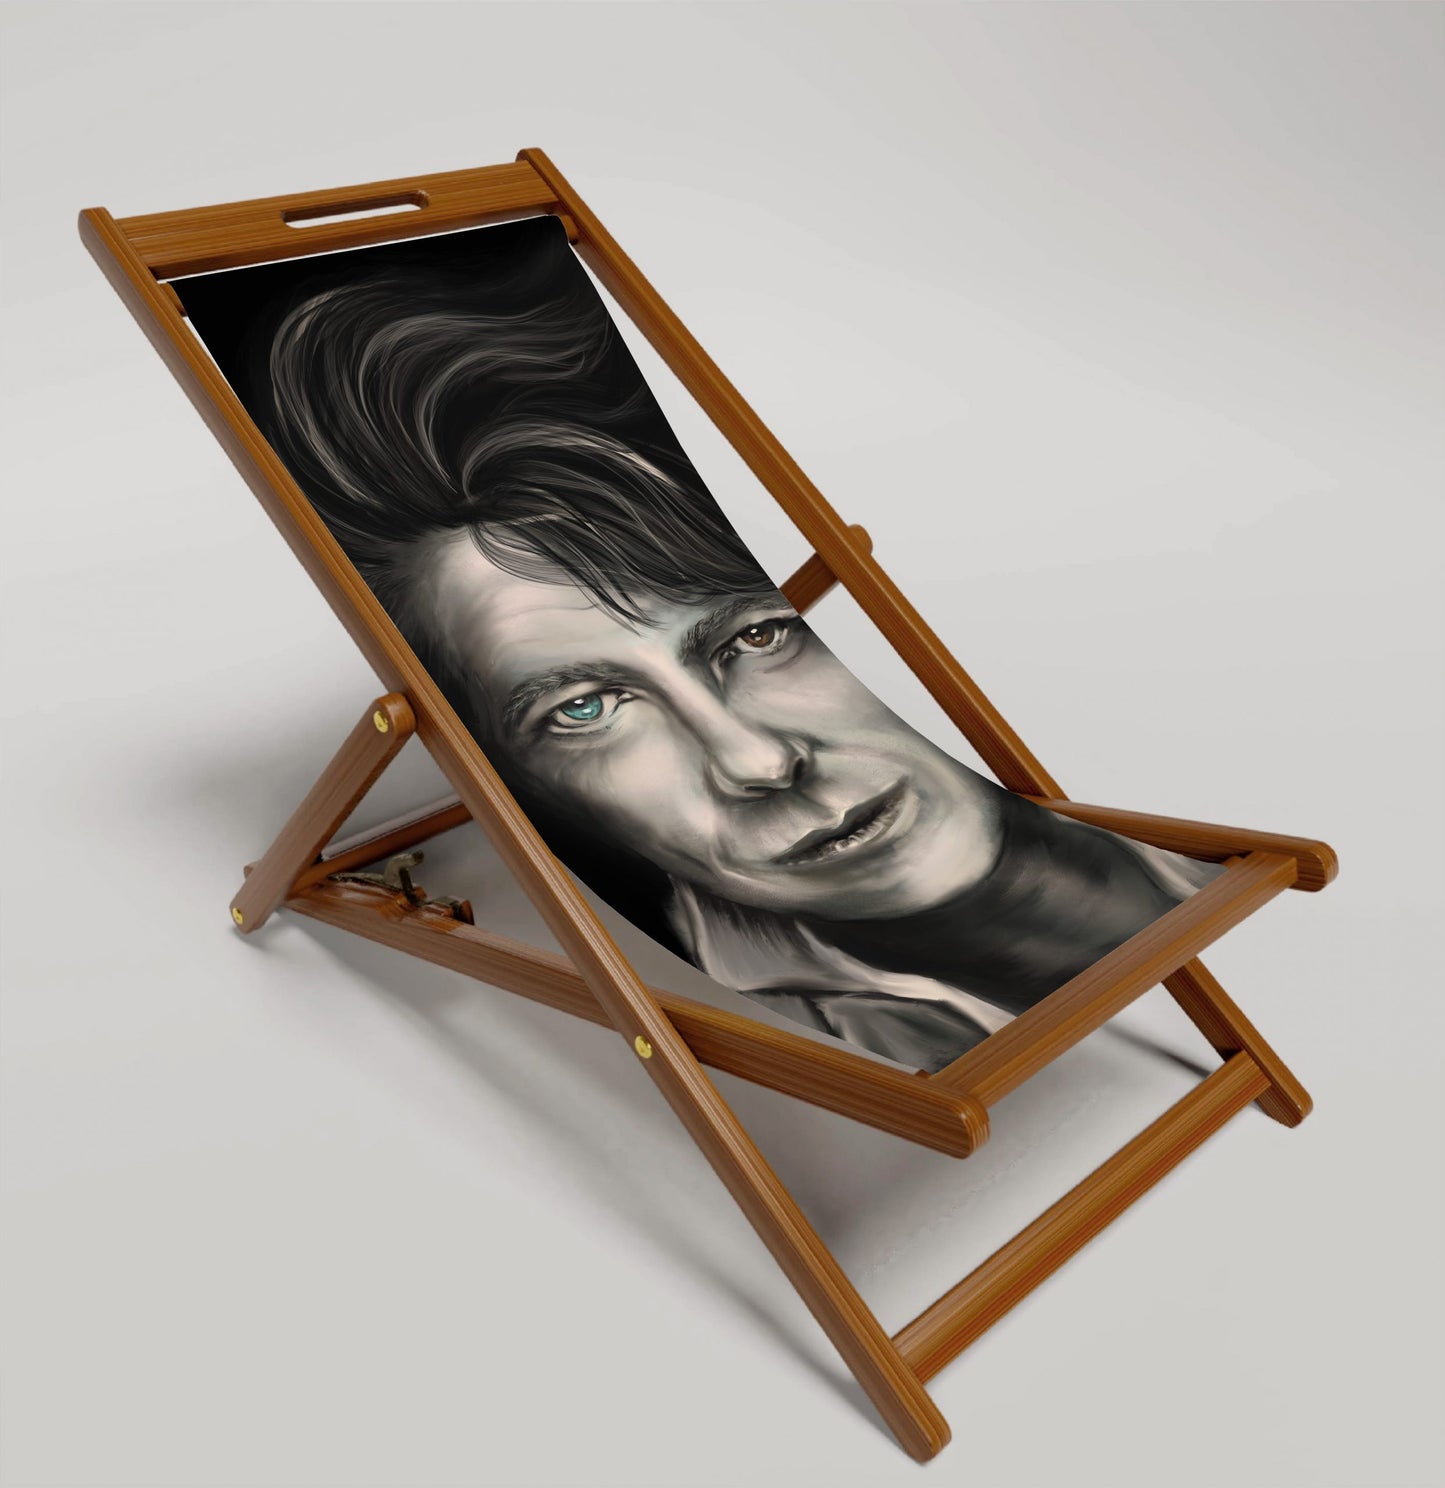 Deck Chairs - Famous Faces